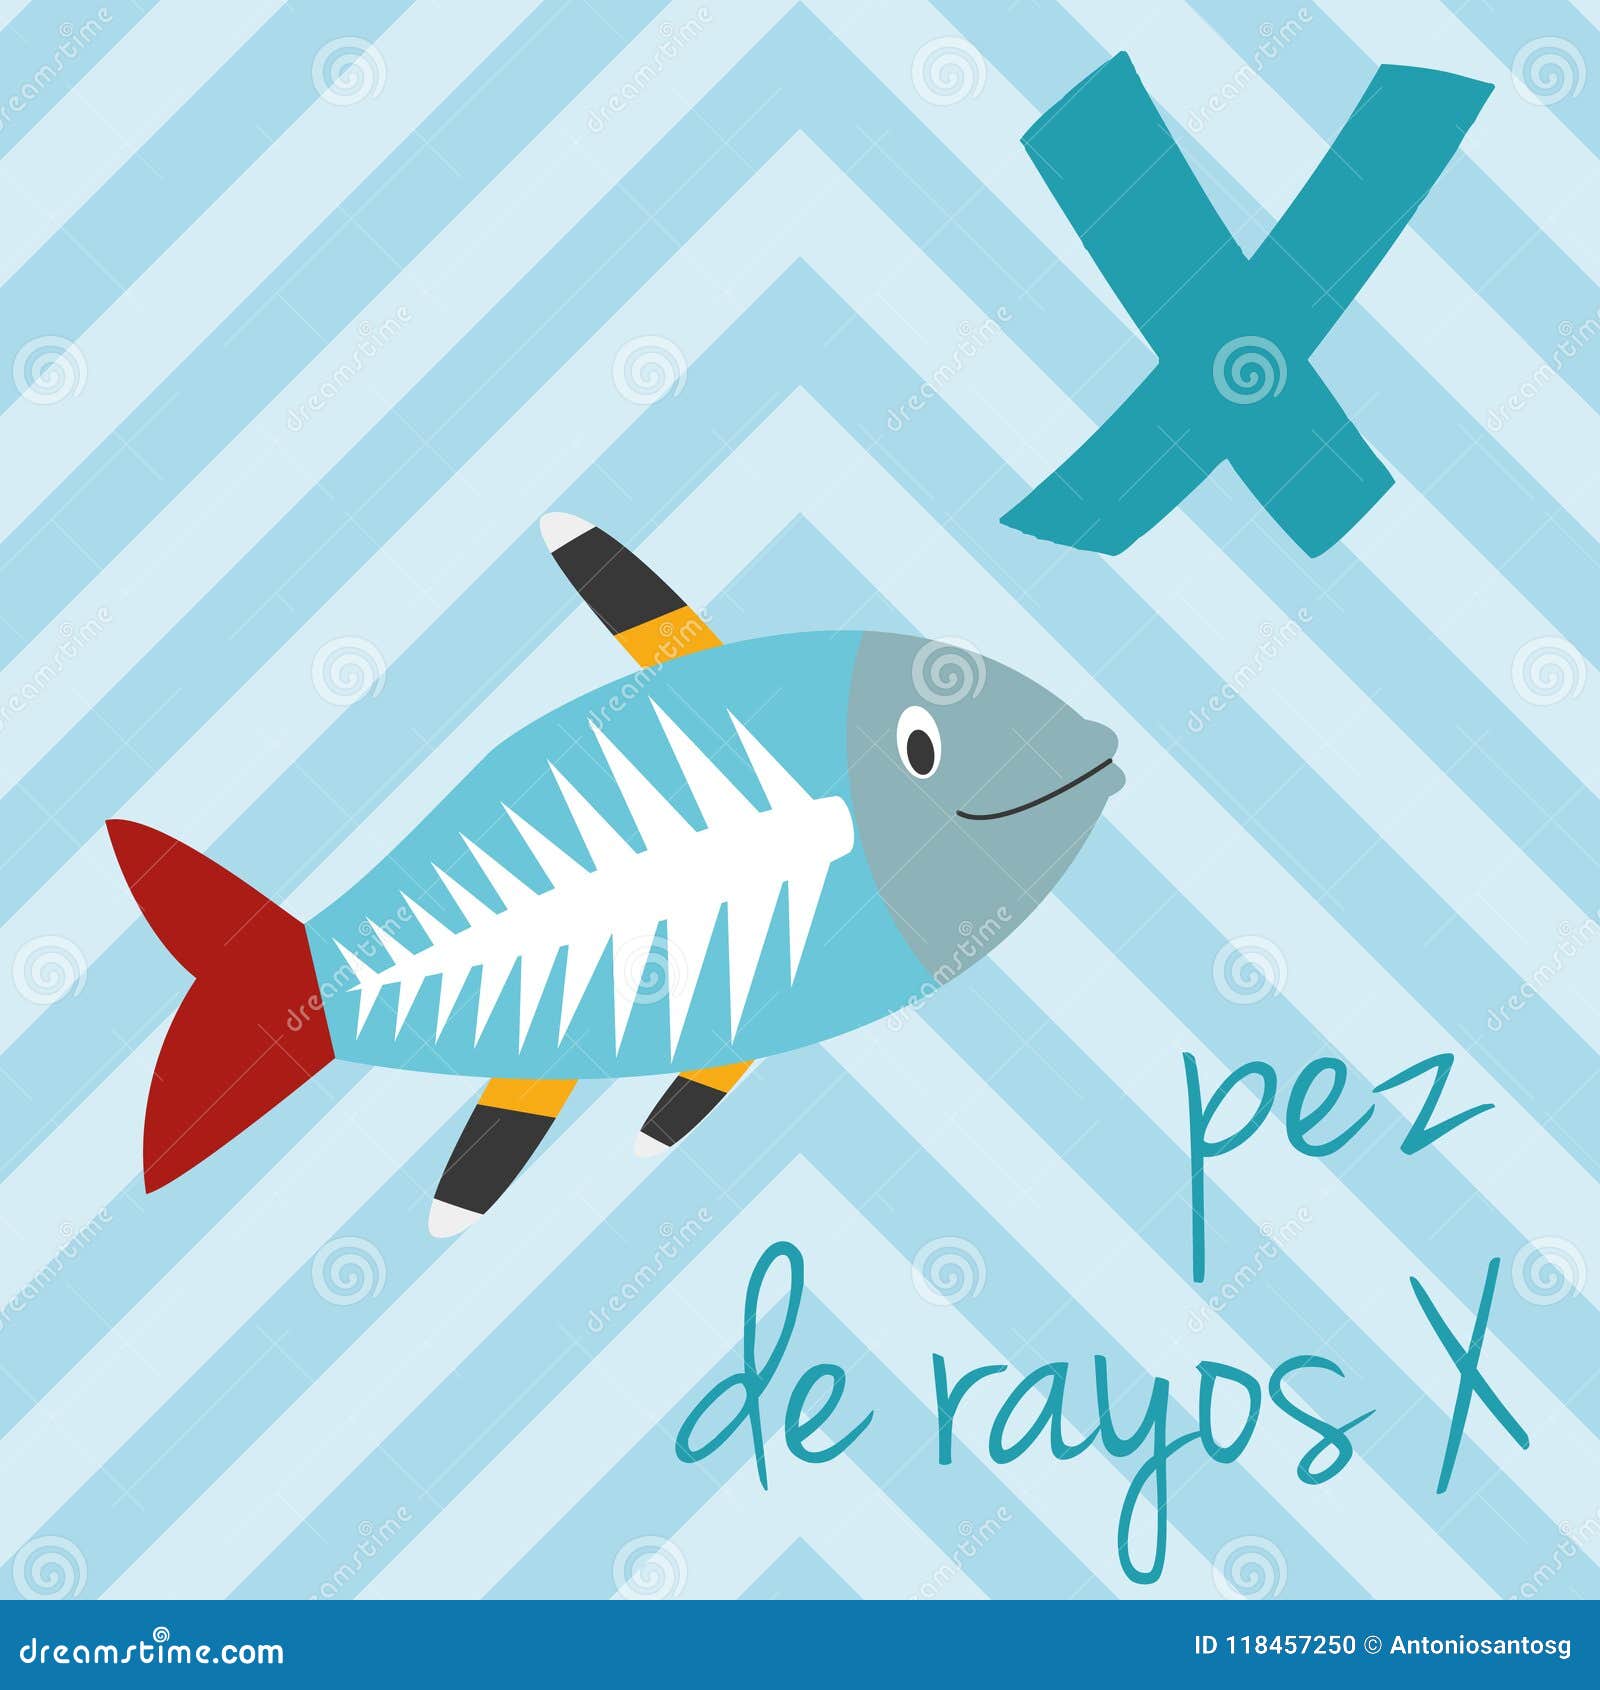 cute cartoon zoo illustrated alphabet with funny animals. spanish alphabet: x for pez de rayos x.